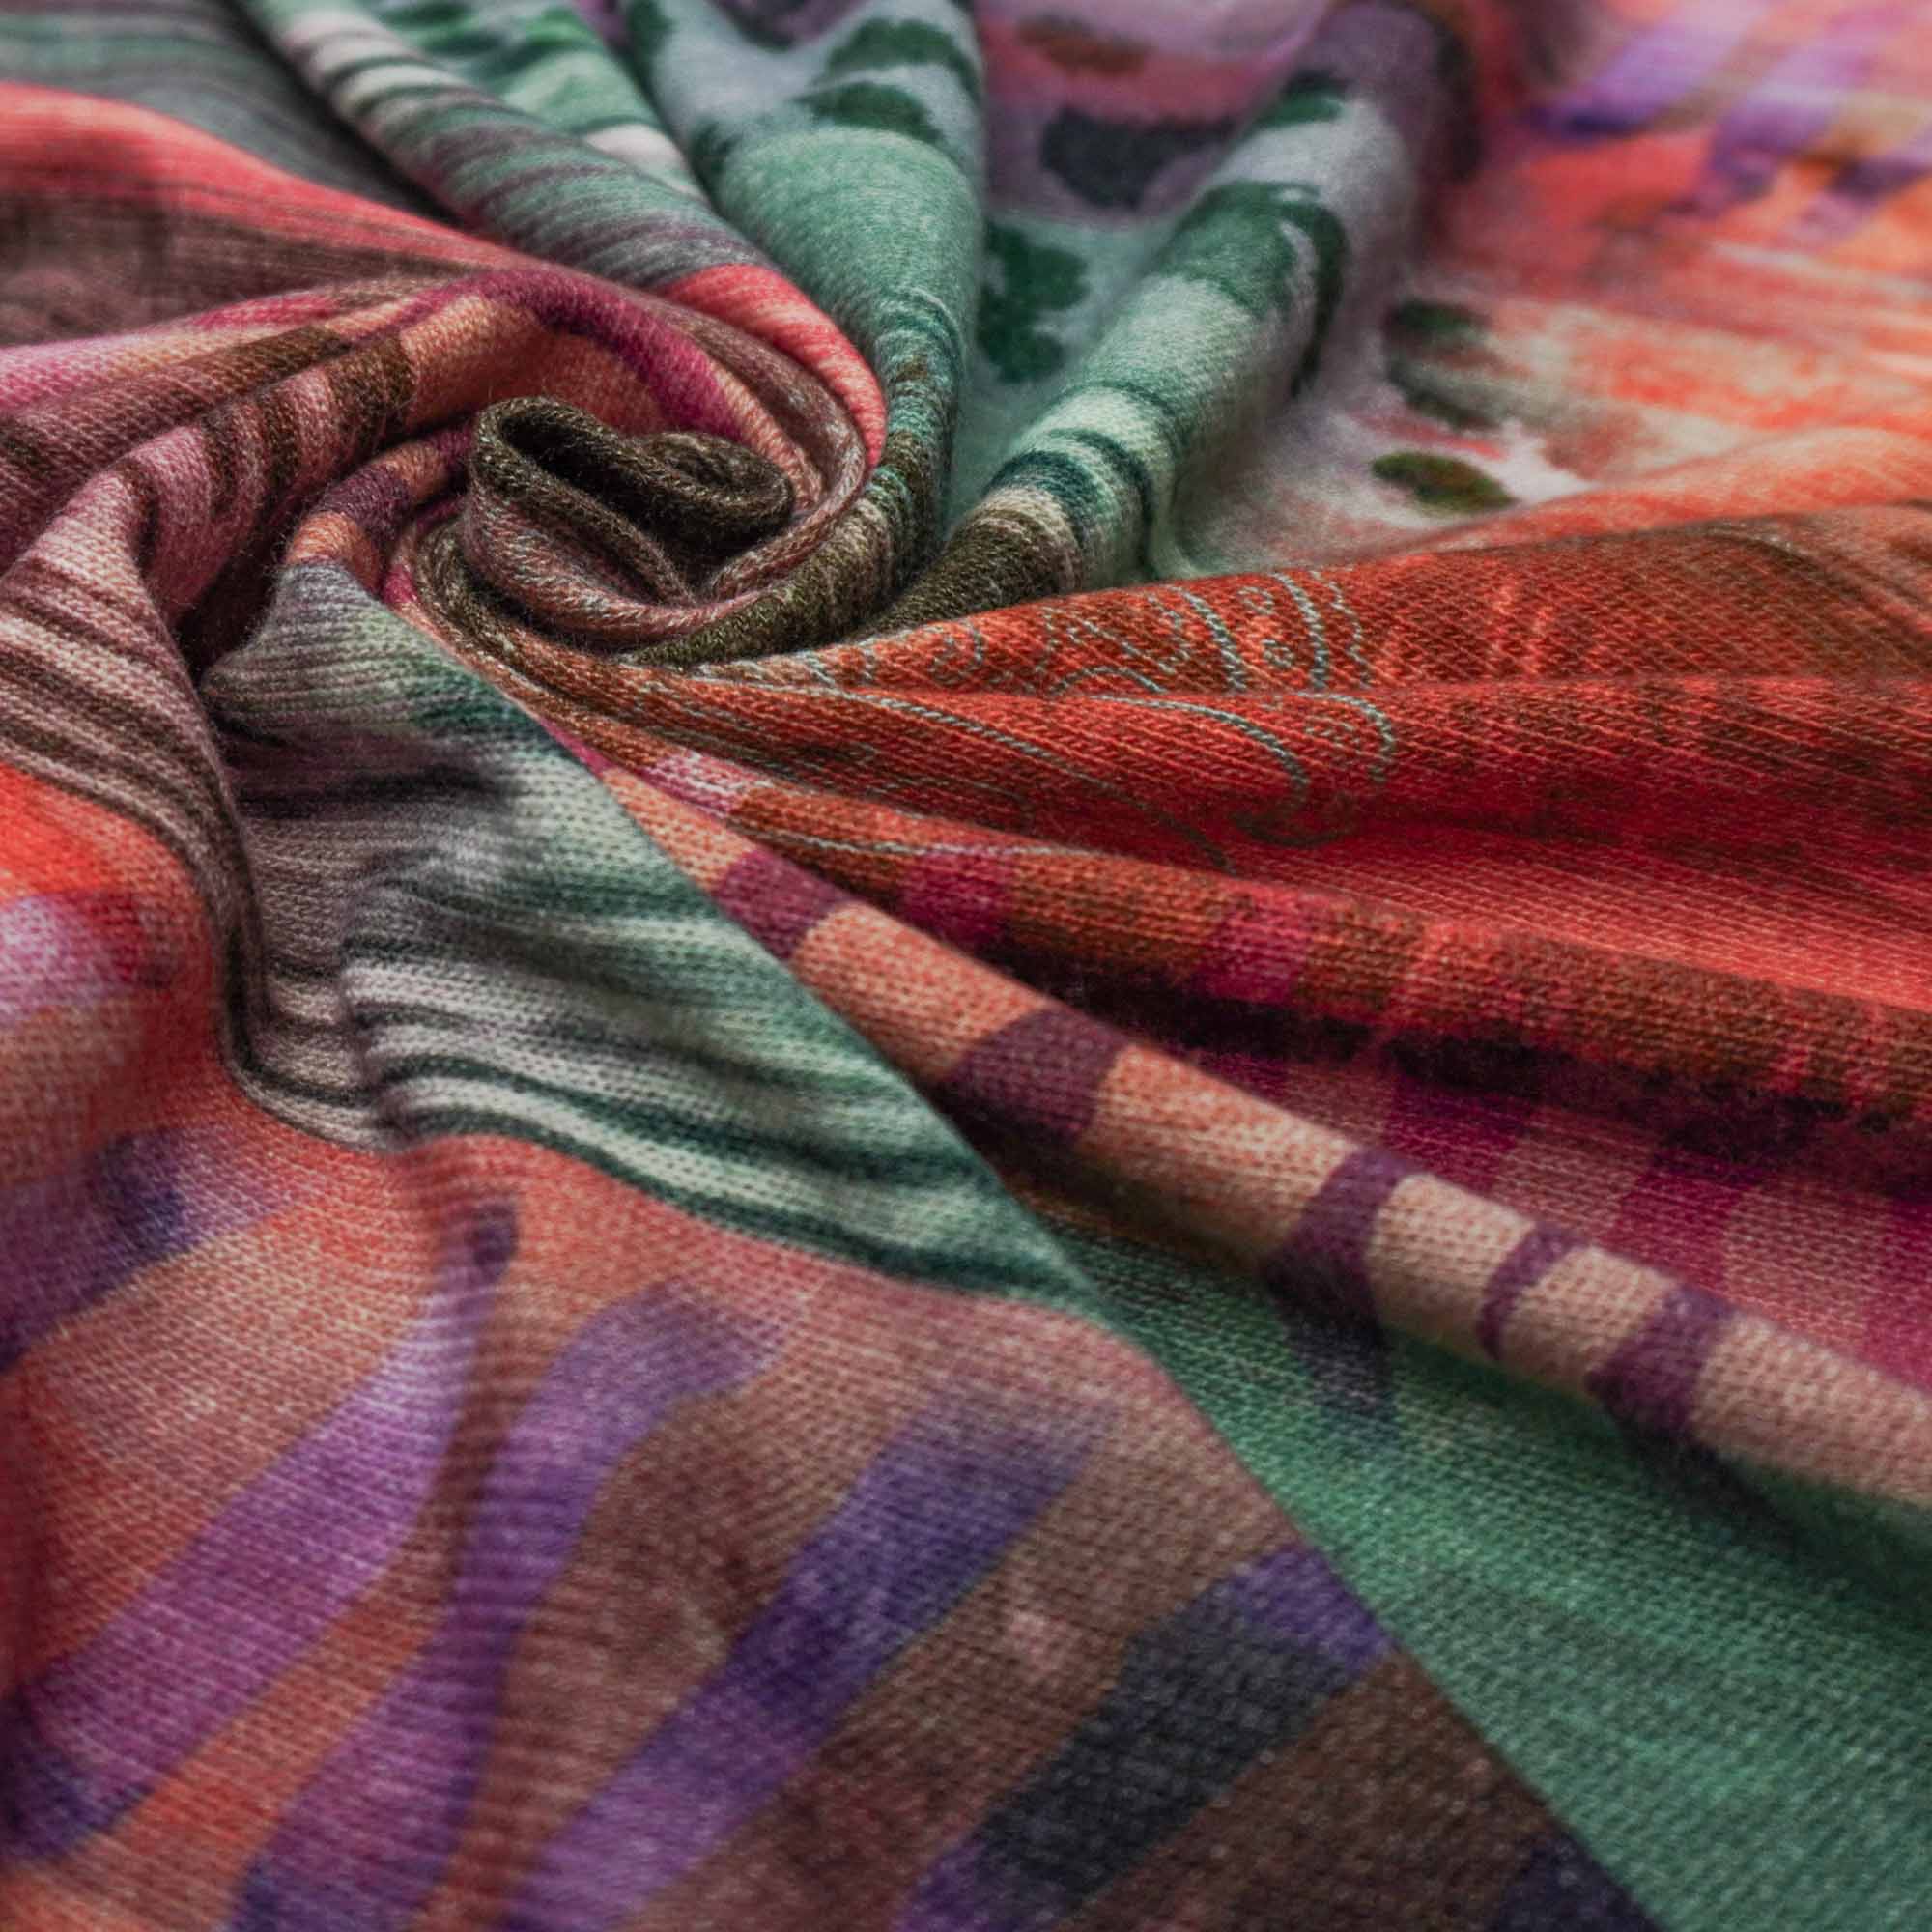 Tecido malha tricot estampado animal print/paisley (tecido italiano legitímo)